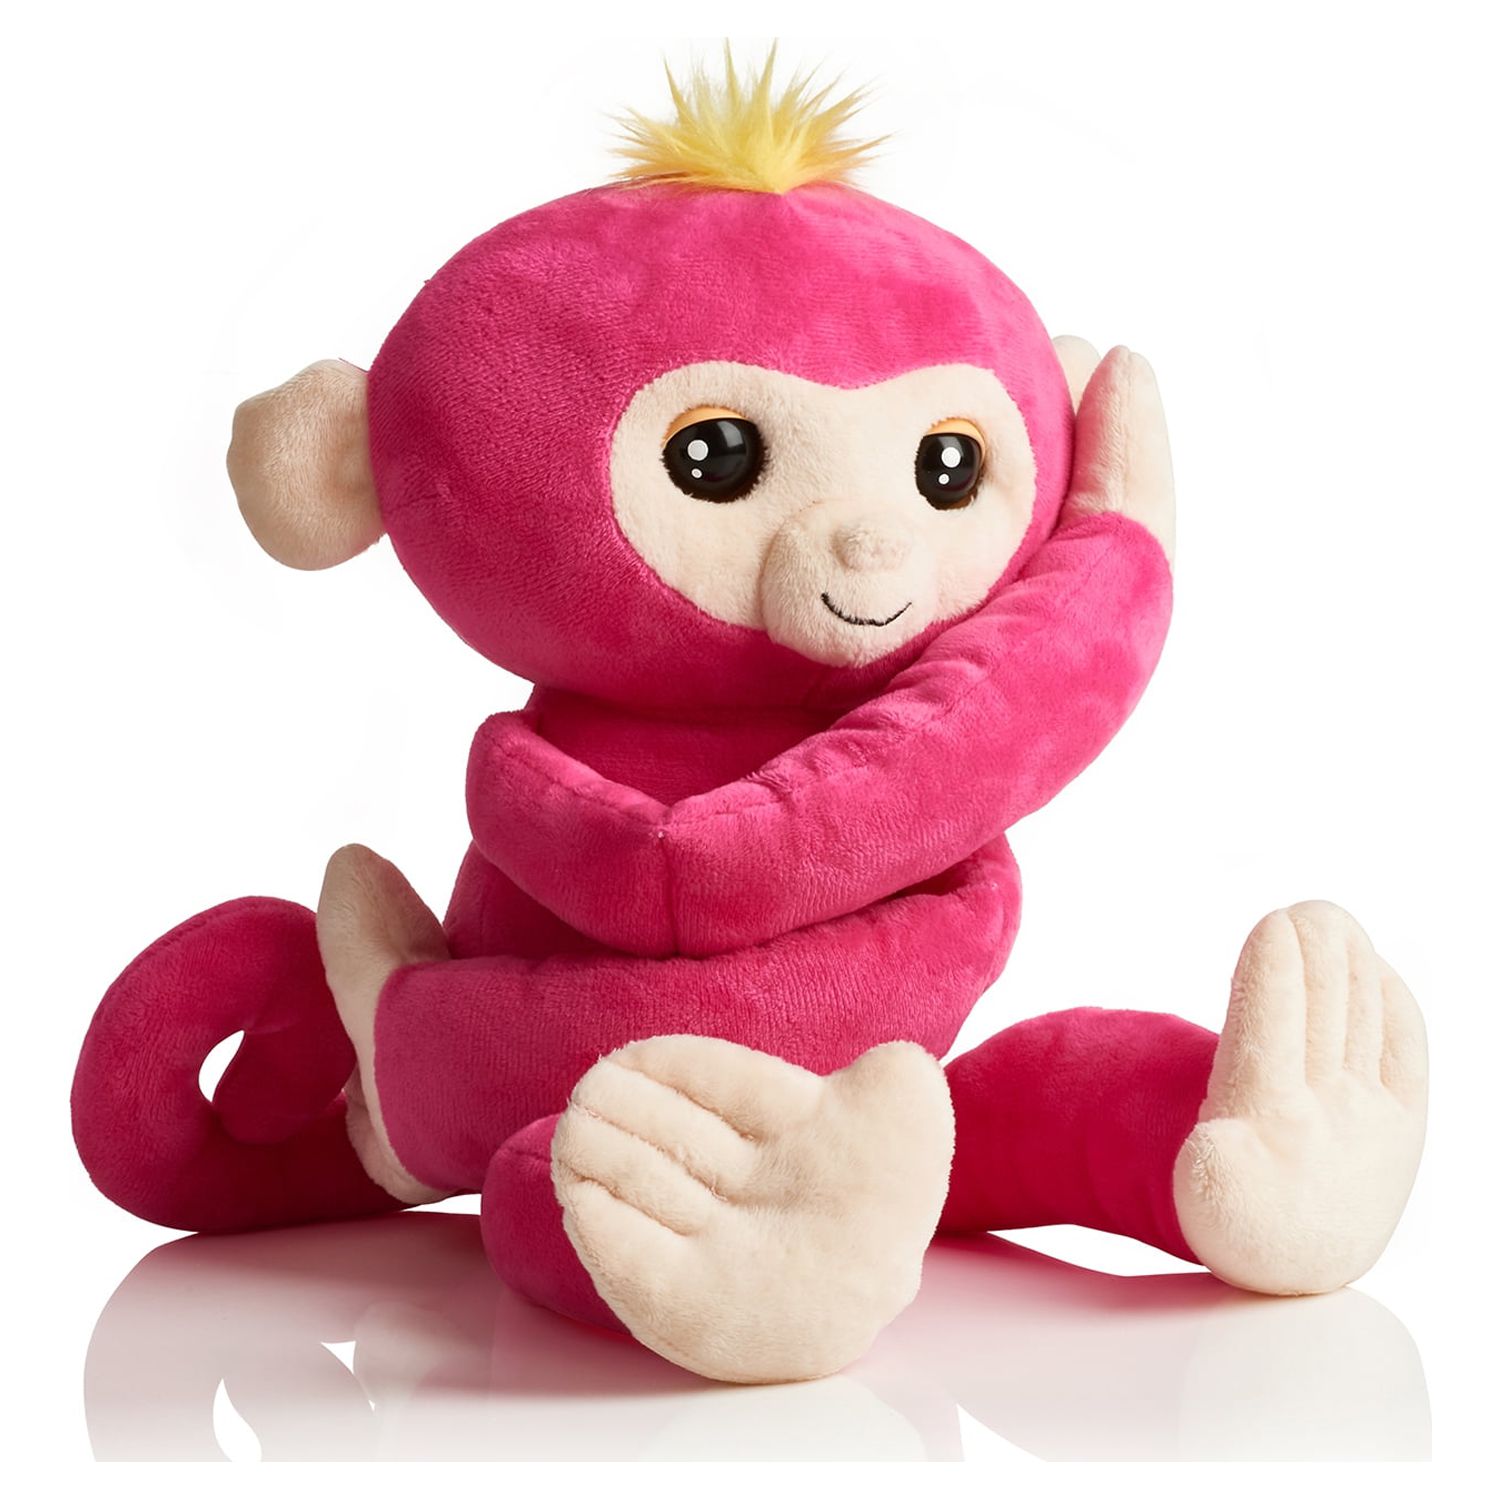 Fingerlings HUGS - Bella (Pink) - Interactive Plush Monkey by WowWee - image 1 of 9